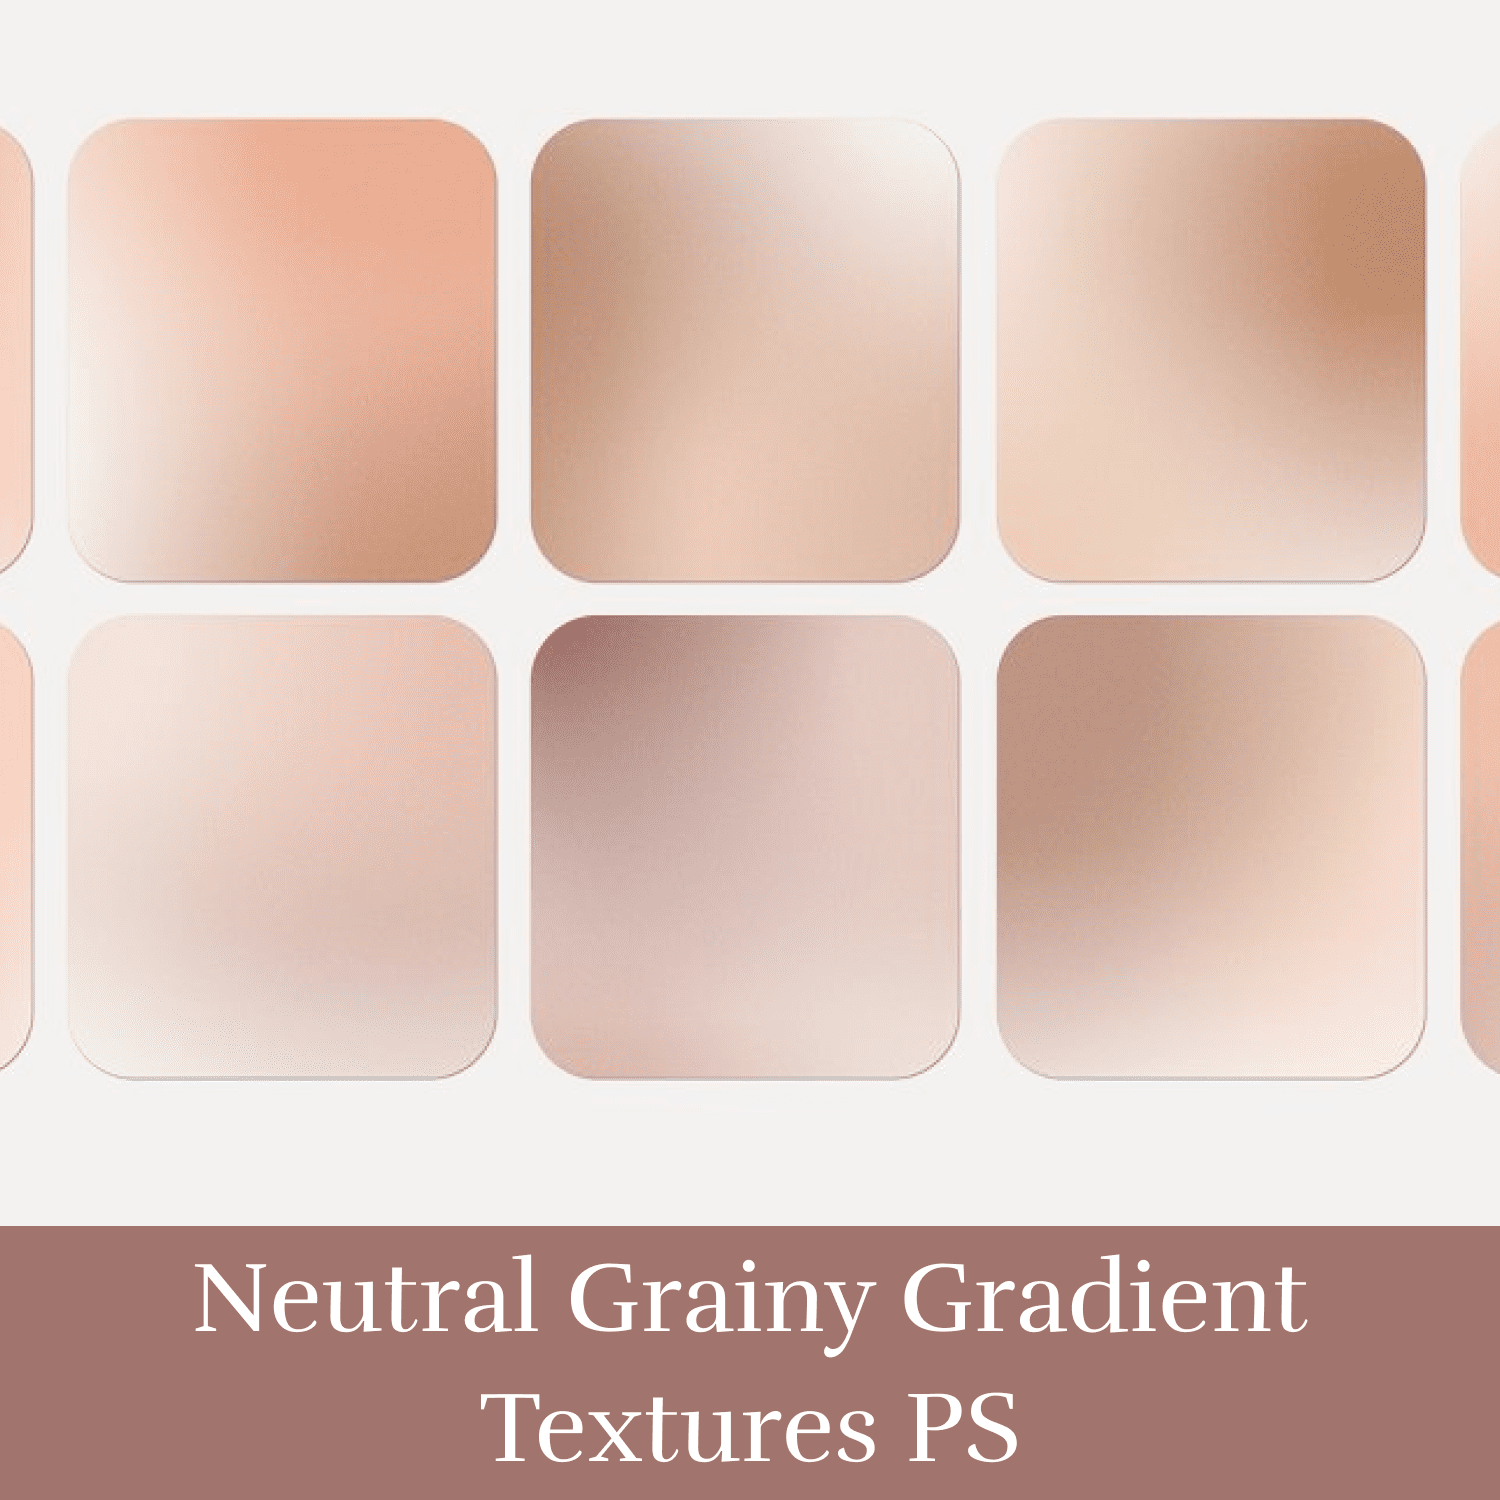 Neutral Grainy Gradient Textures PS cover.